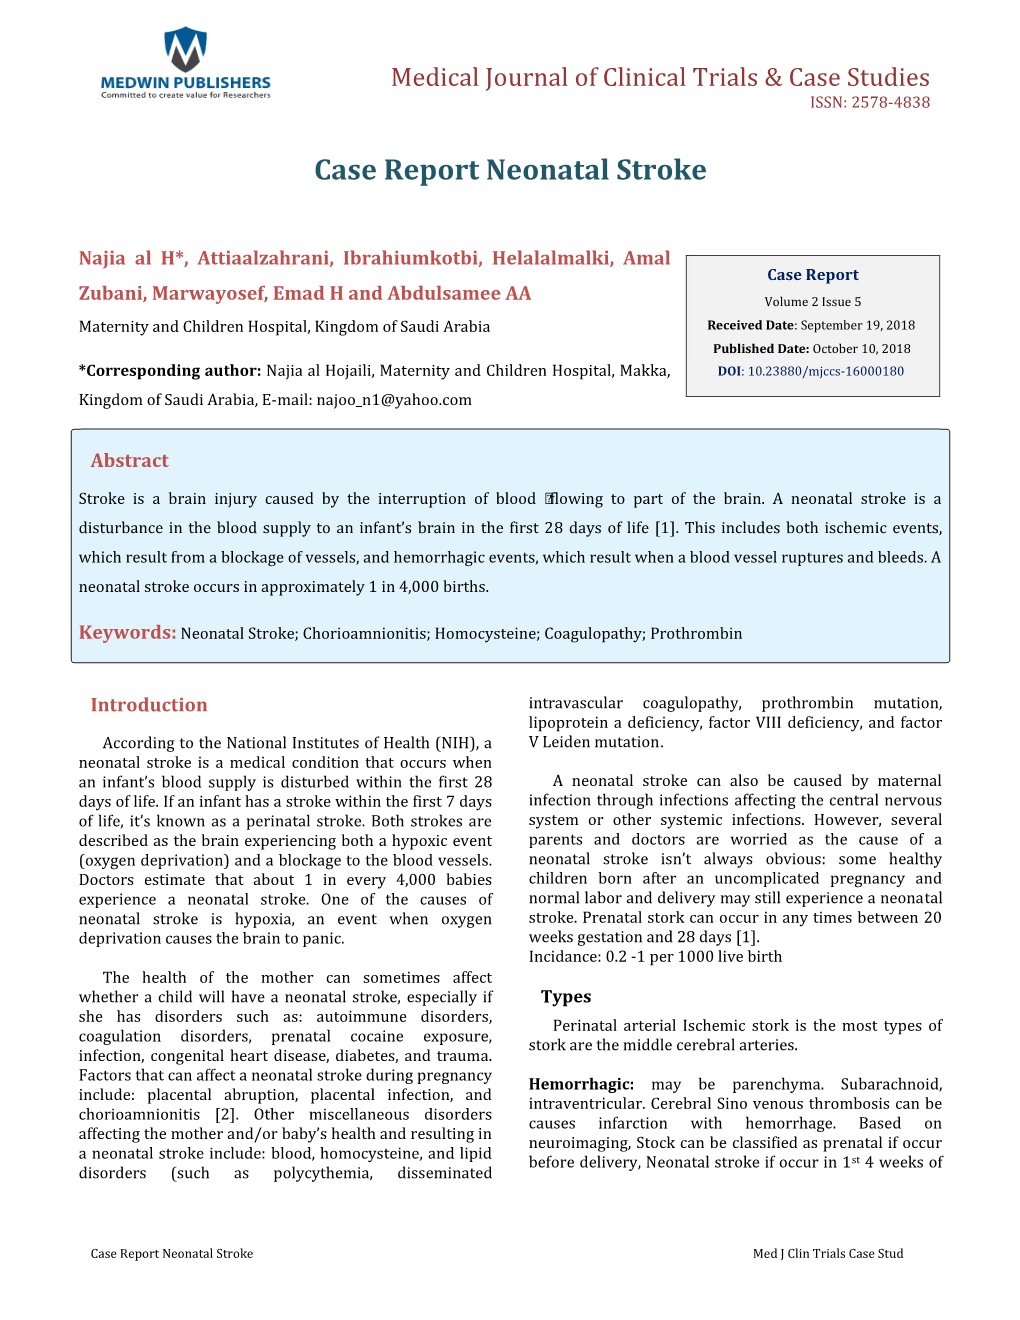 Najia Al H, Et Al. Case Report Neonatal Stroke. Med J Clin Trials Case Stud 2018, 2(5): 000180